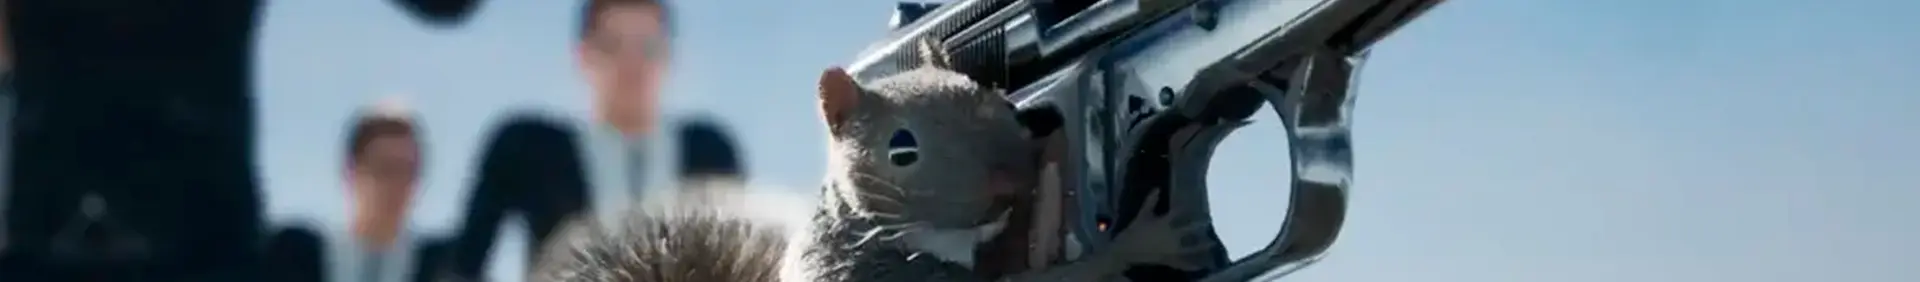 Squirrel With A Gun